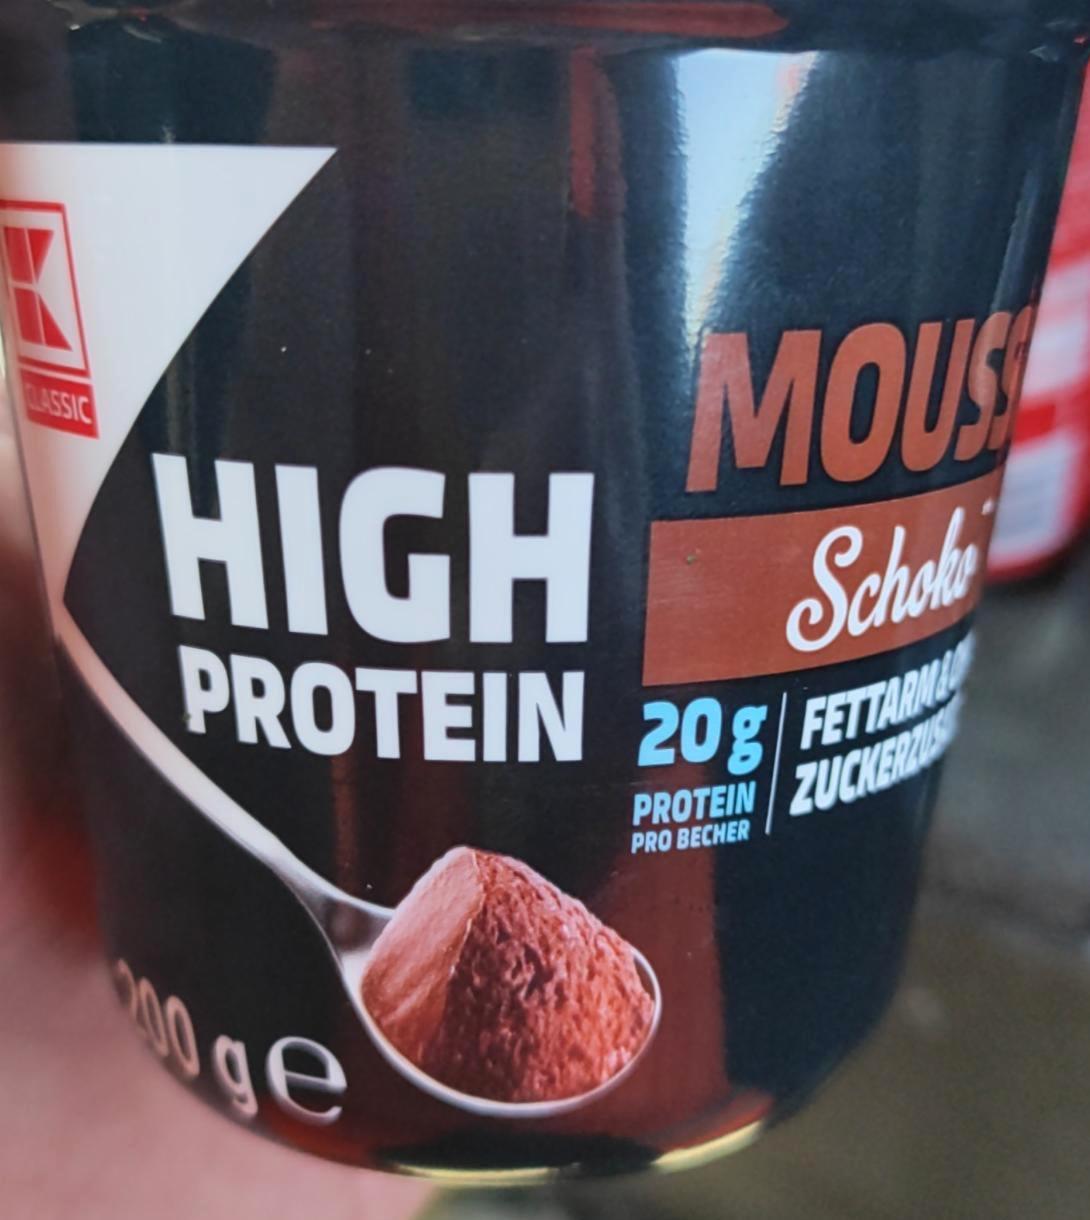 Képek - High protein mousse Schoko K-Classic